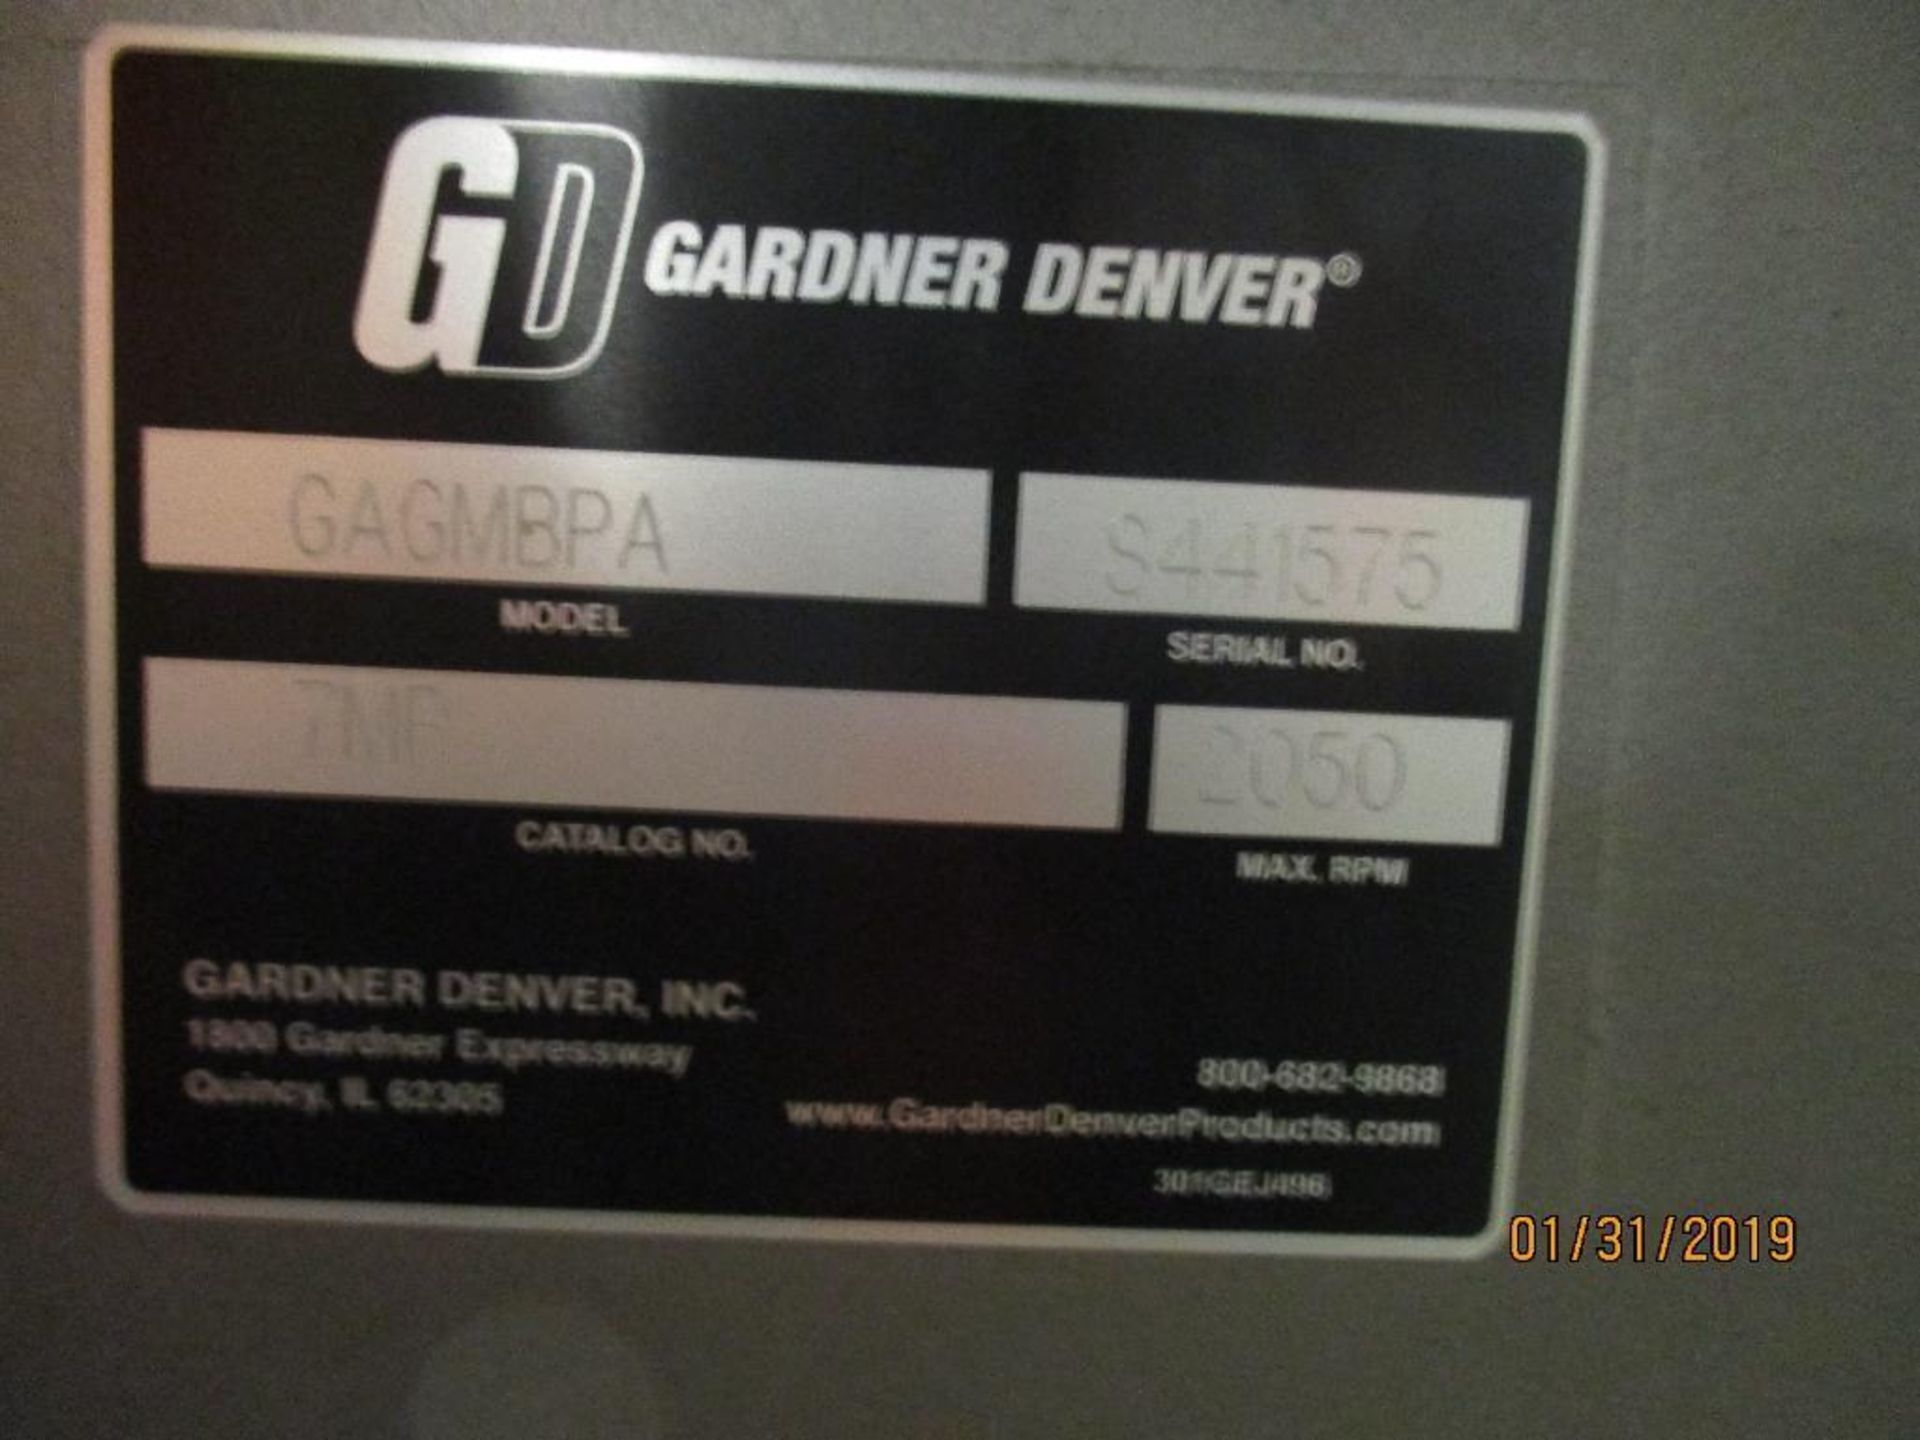 Gardner Denver Sutorbilt Vacuum Pump M/N GAGMBPA S/N S441575 - Image 2 of 2